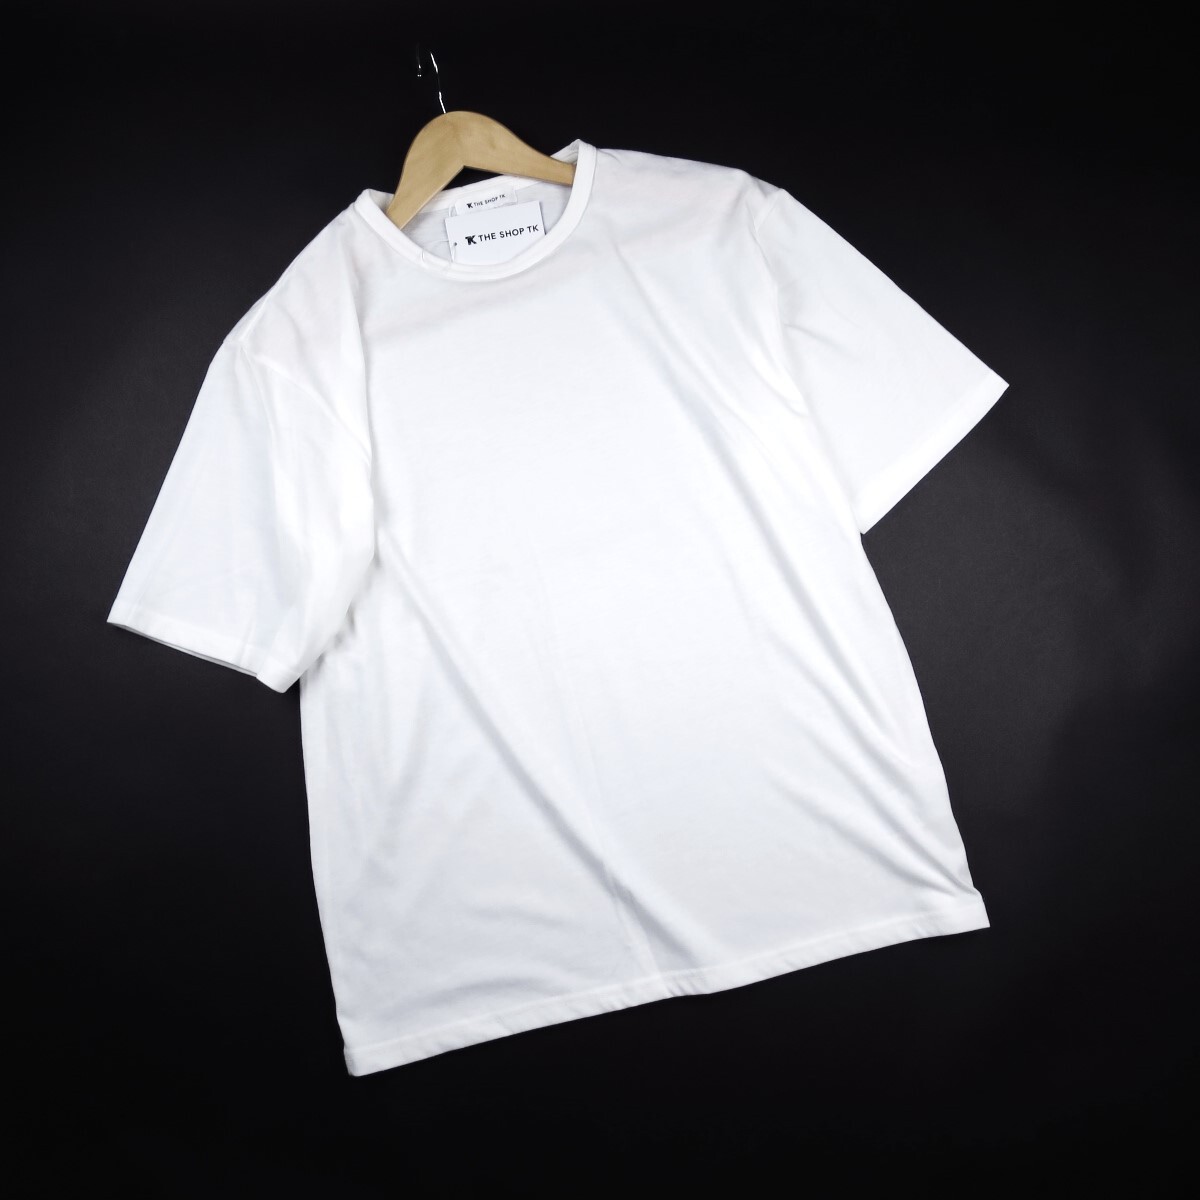  новый товар * Takeo Kikuchi / кардиган футболка Layered комплект 250/052be/[XL]